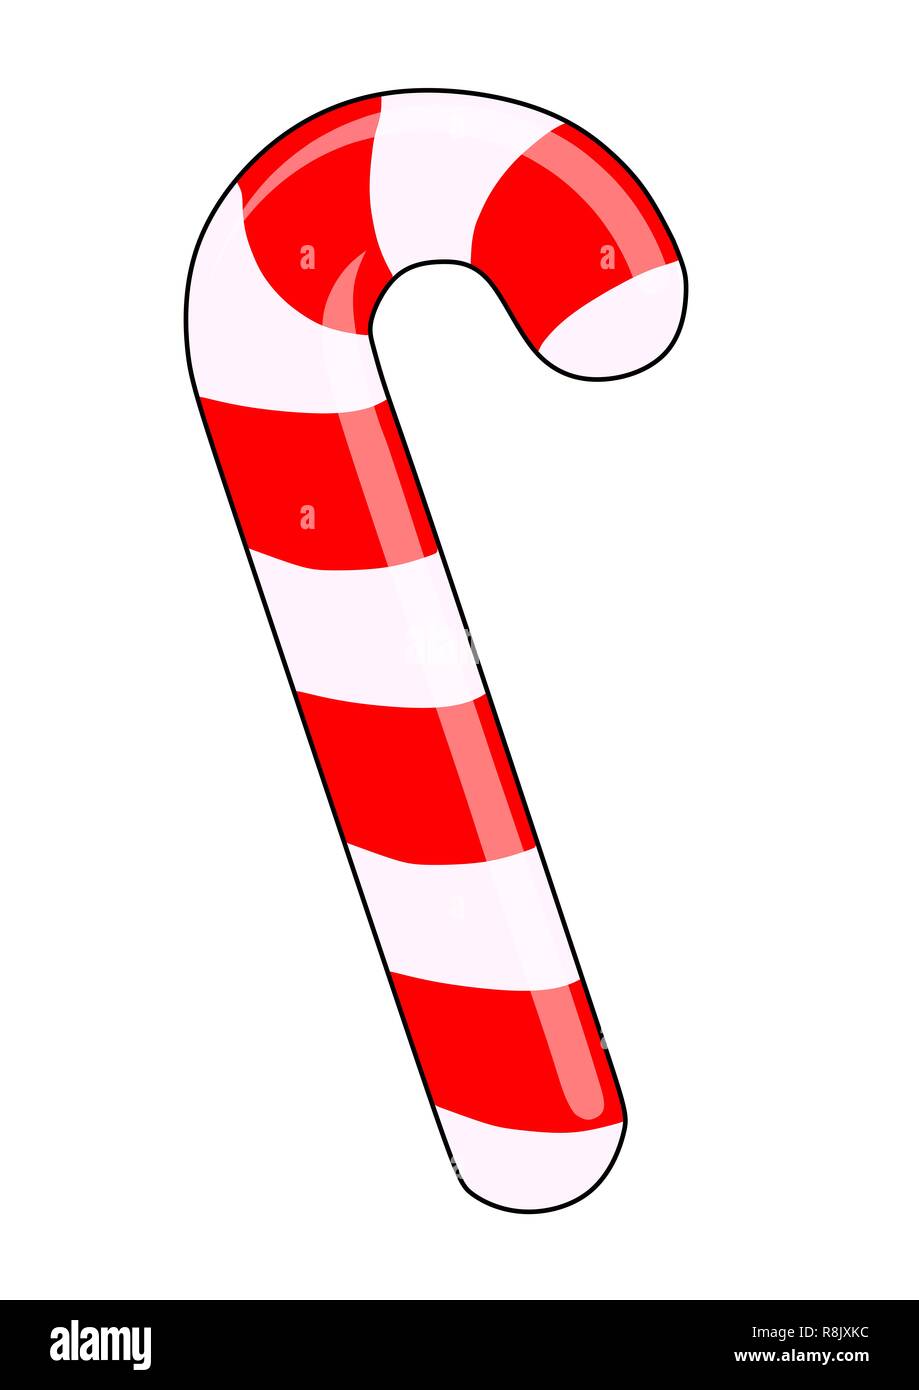 Candy Cane cartoon image Stock Photo - Alamy